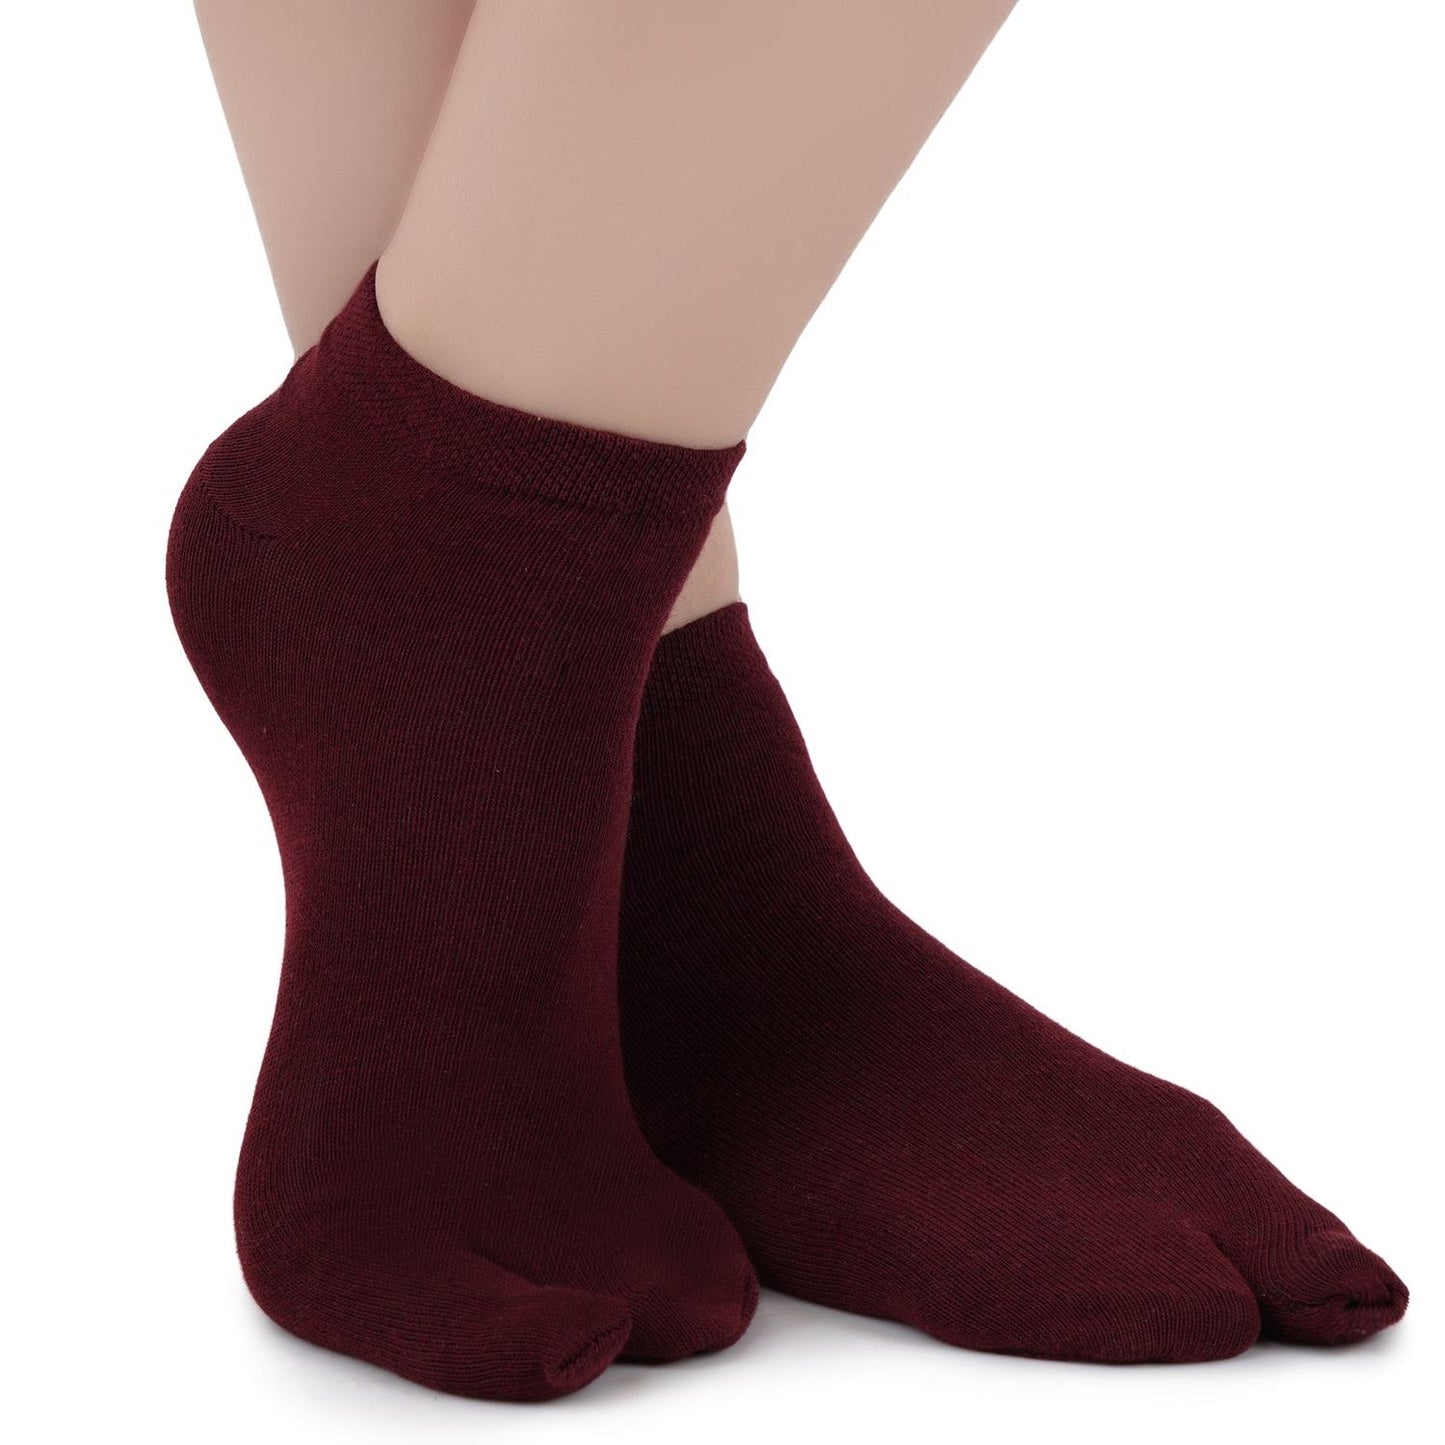 Low Ankle Length Thumb Socks - Maroon